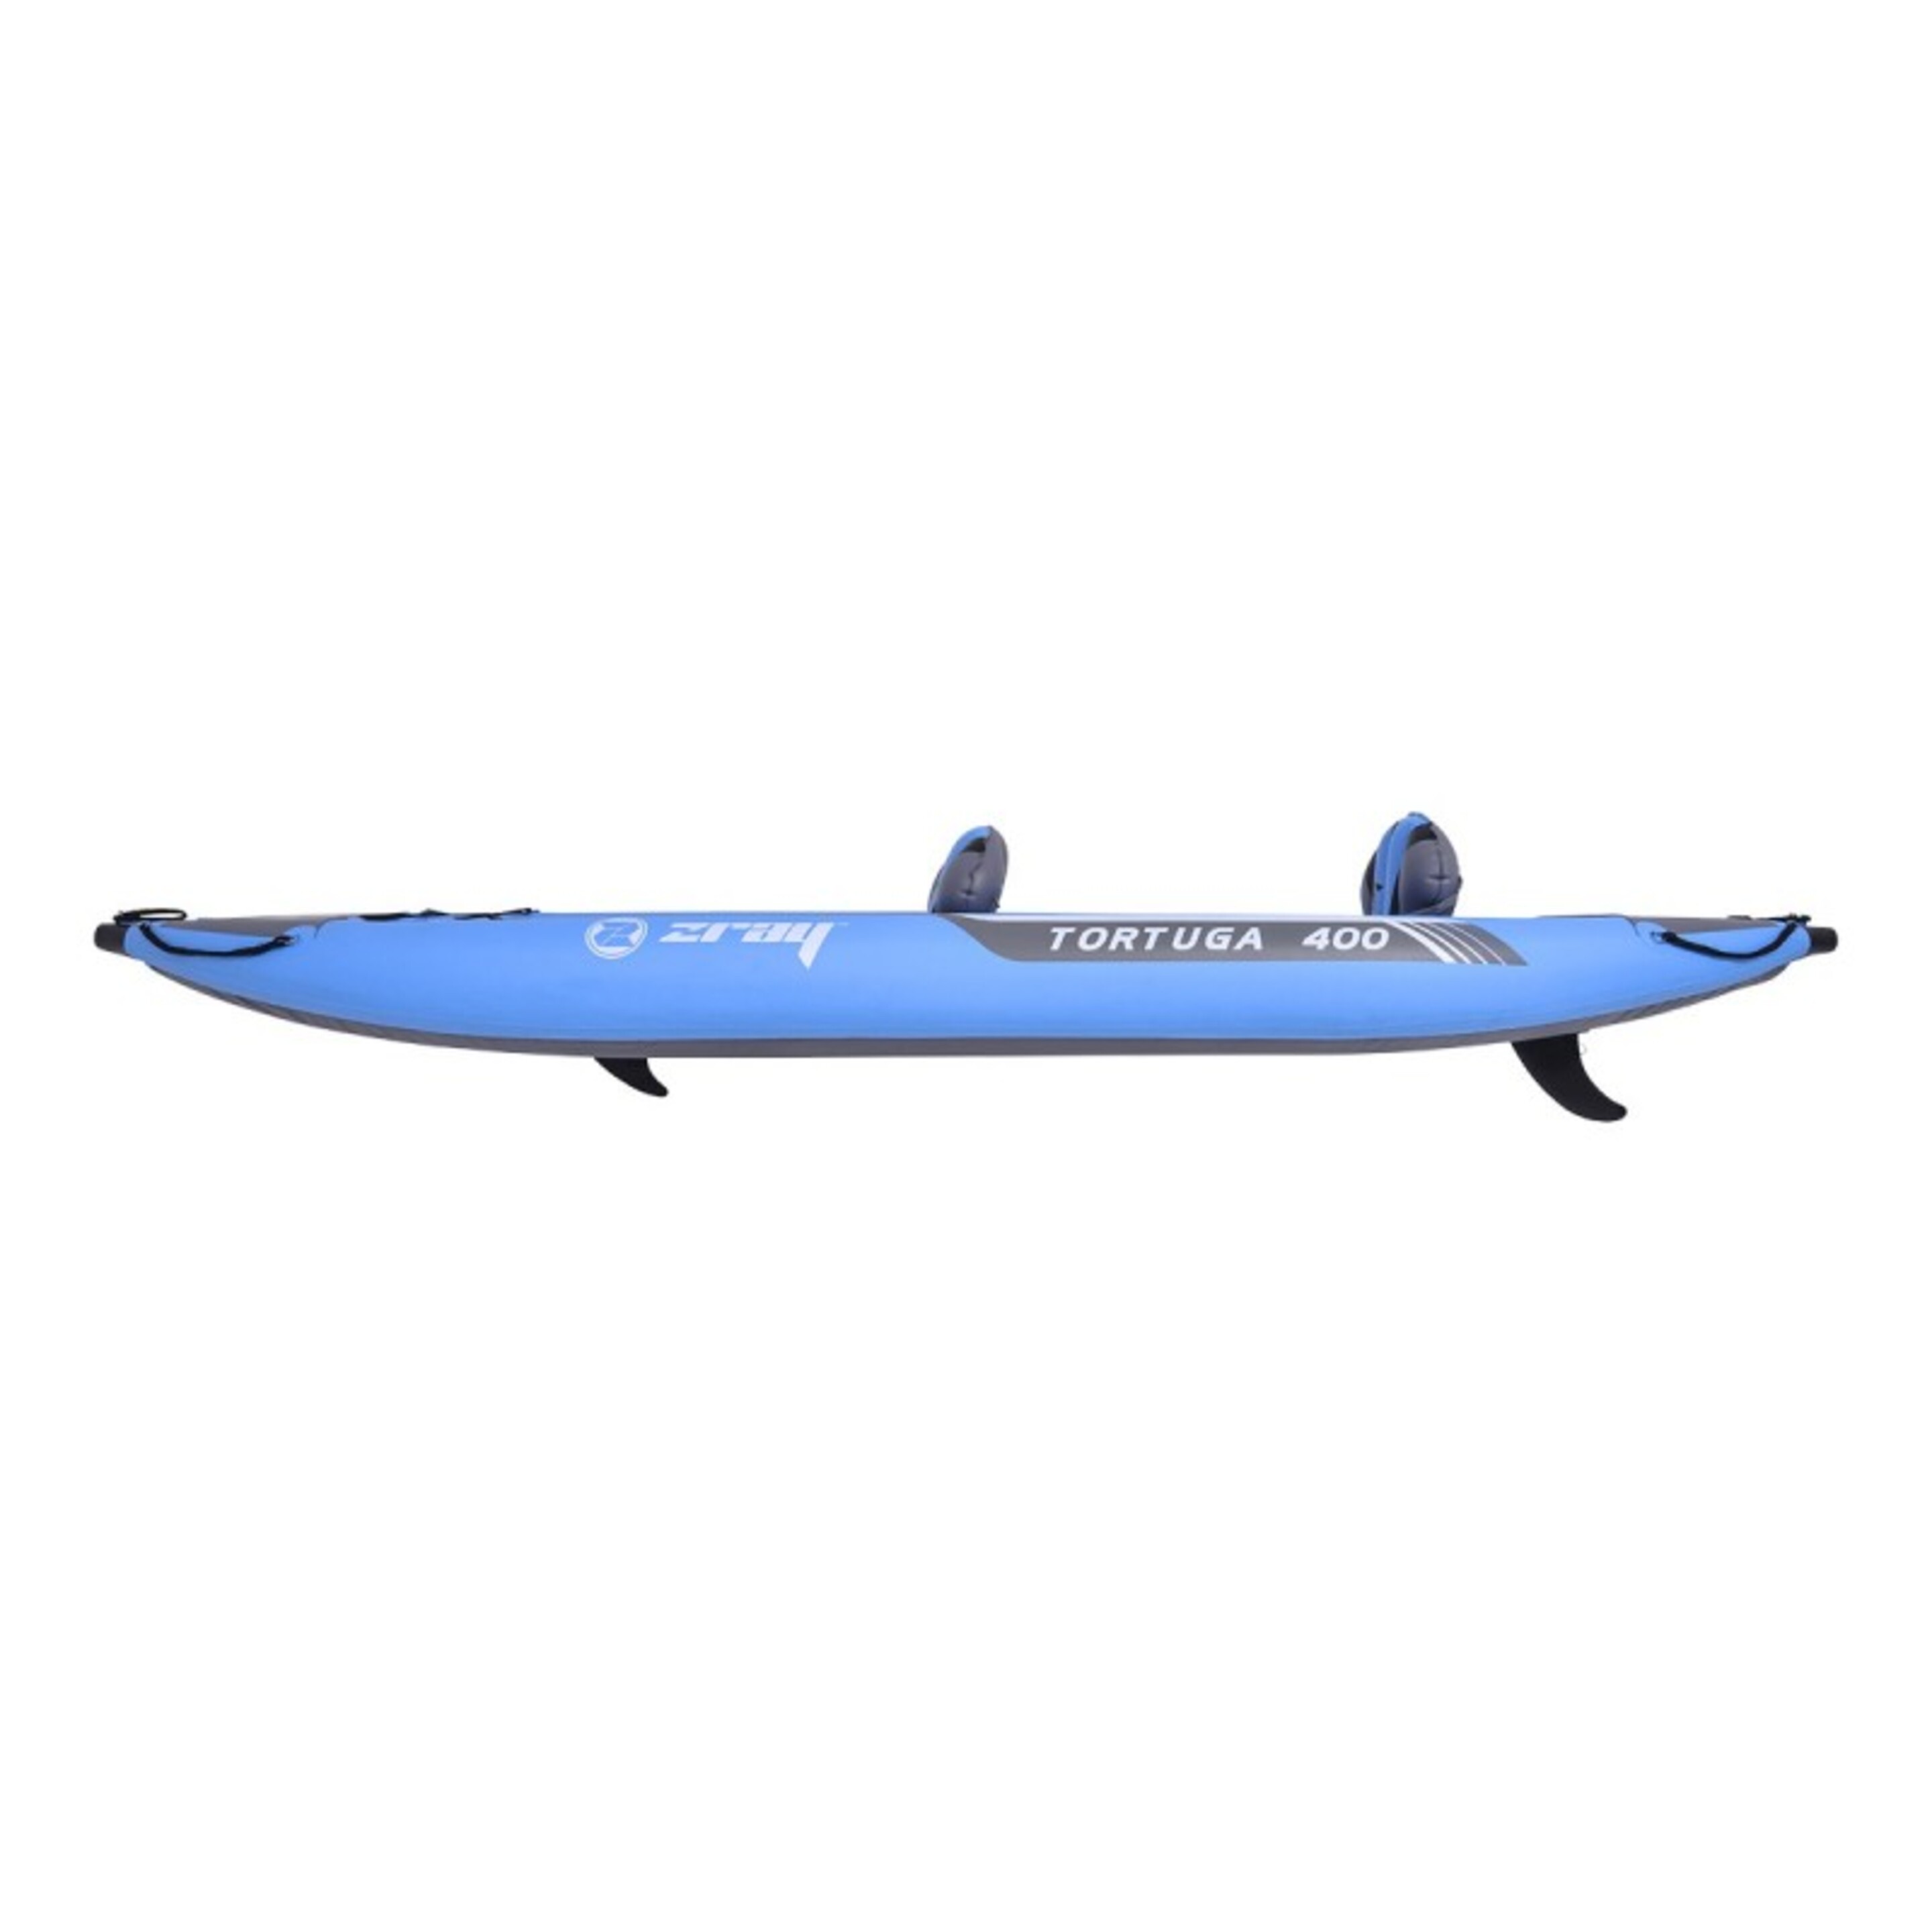 Kayak Hinchable Zray Tortuga 400 Nuevo Modelo 2021 - Multicolor - Kayak 2 plazas  MKP